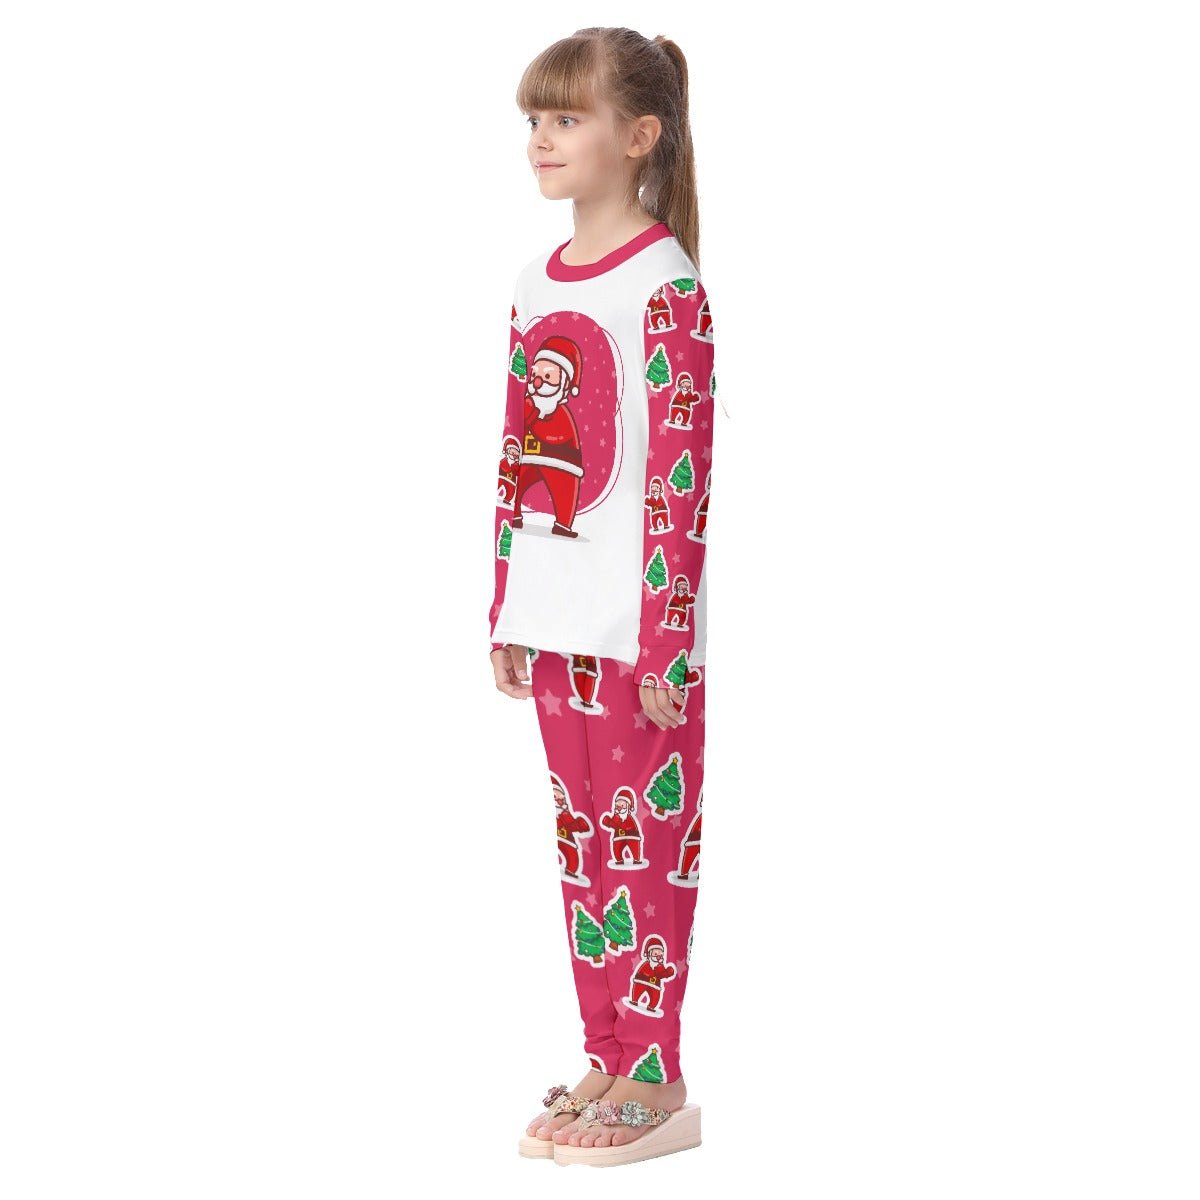 Kids Christmas Pyjama Set - Red Santa Boxing - Festive Style